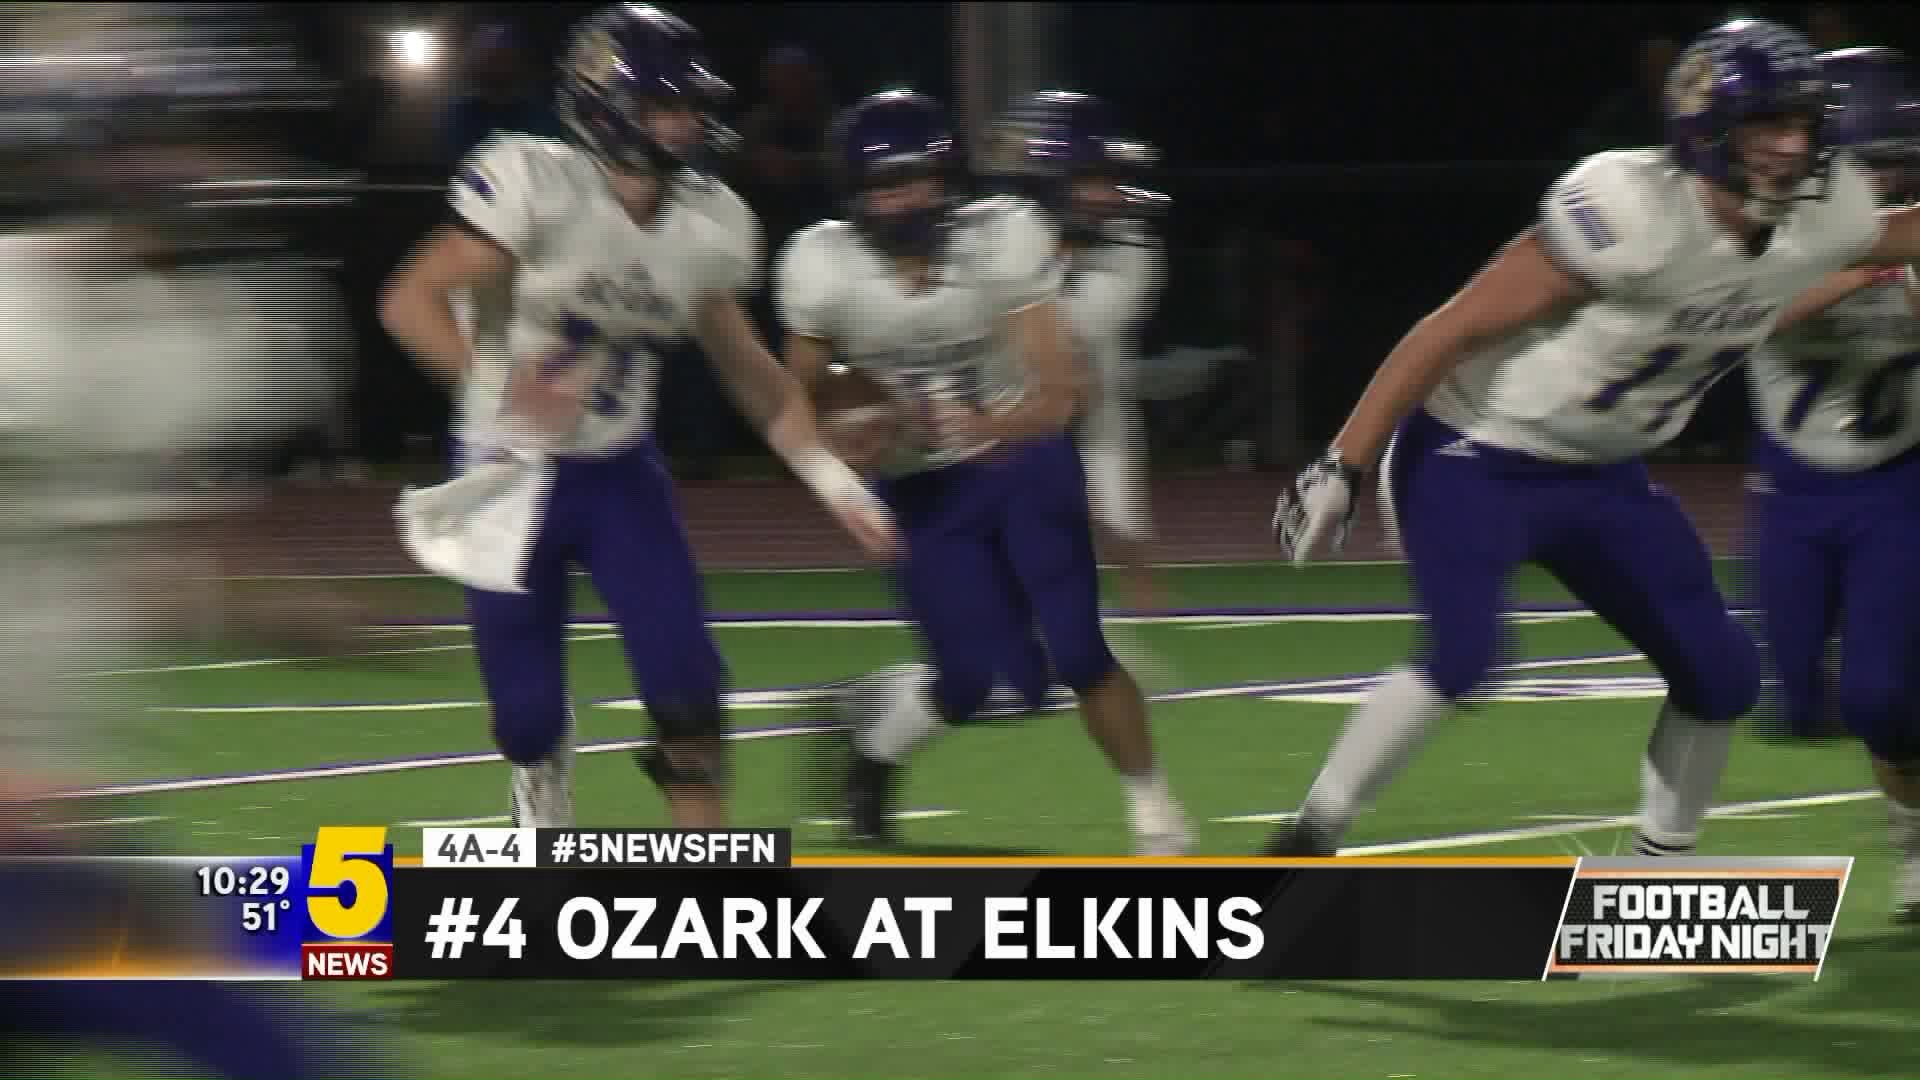 Ozark at Elkins